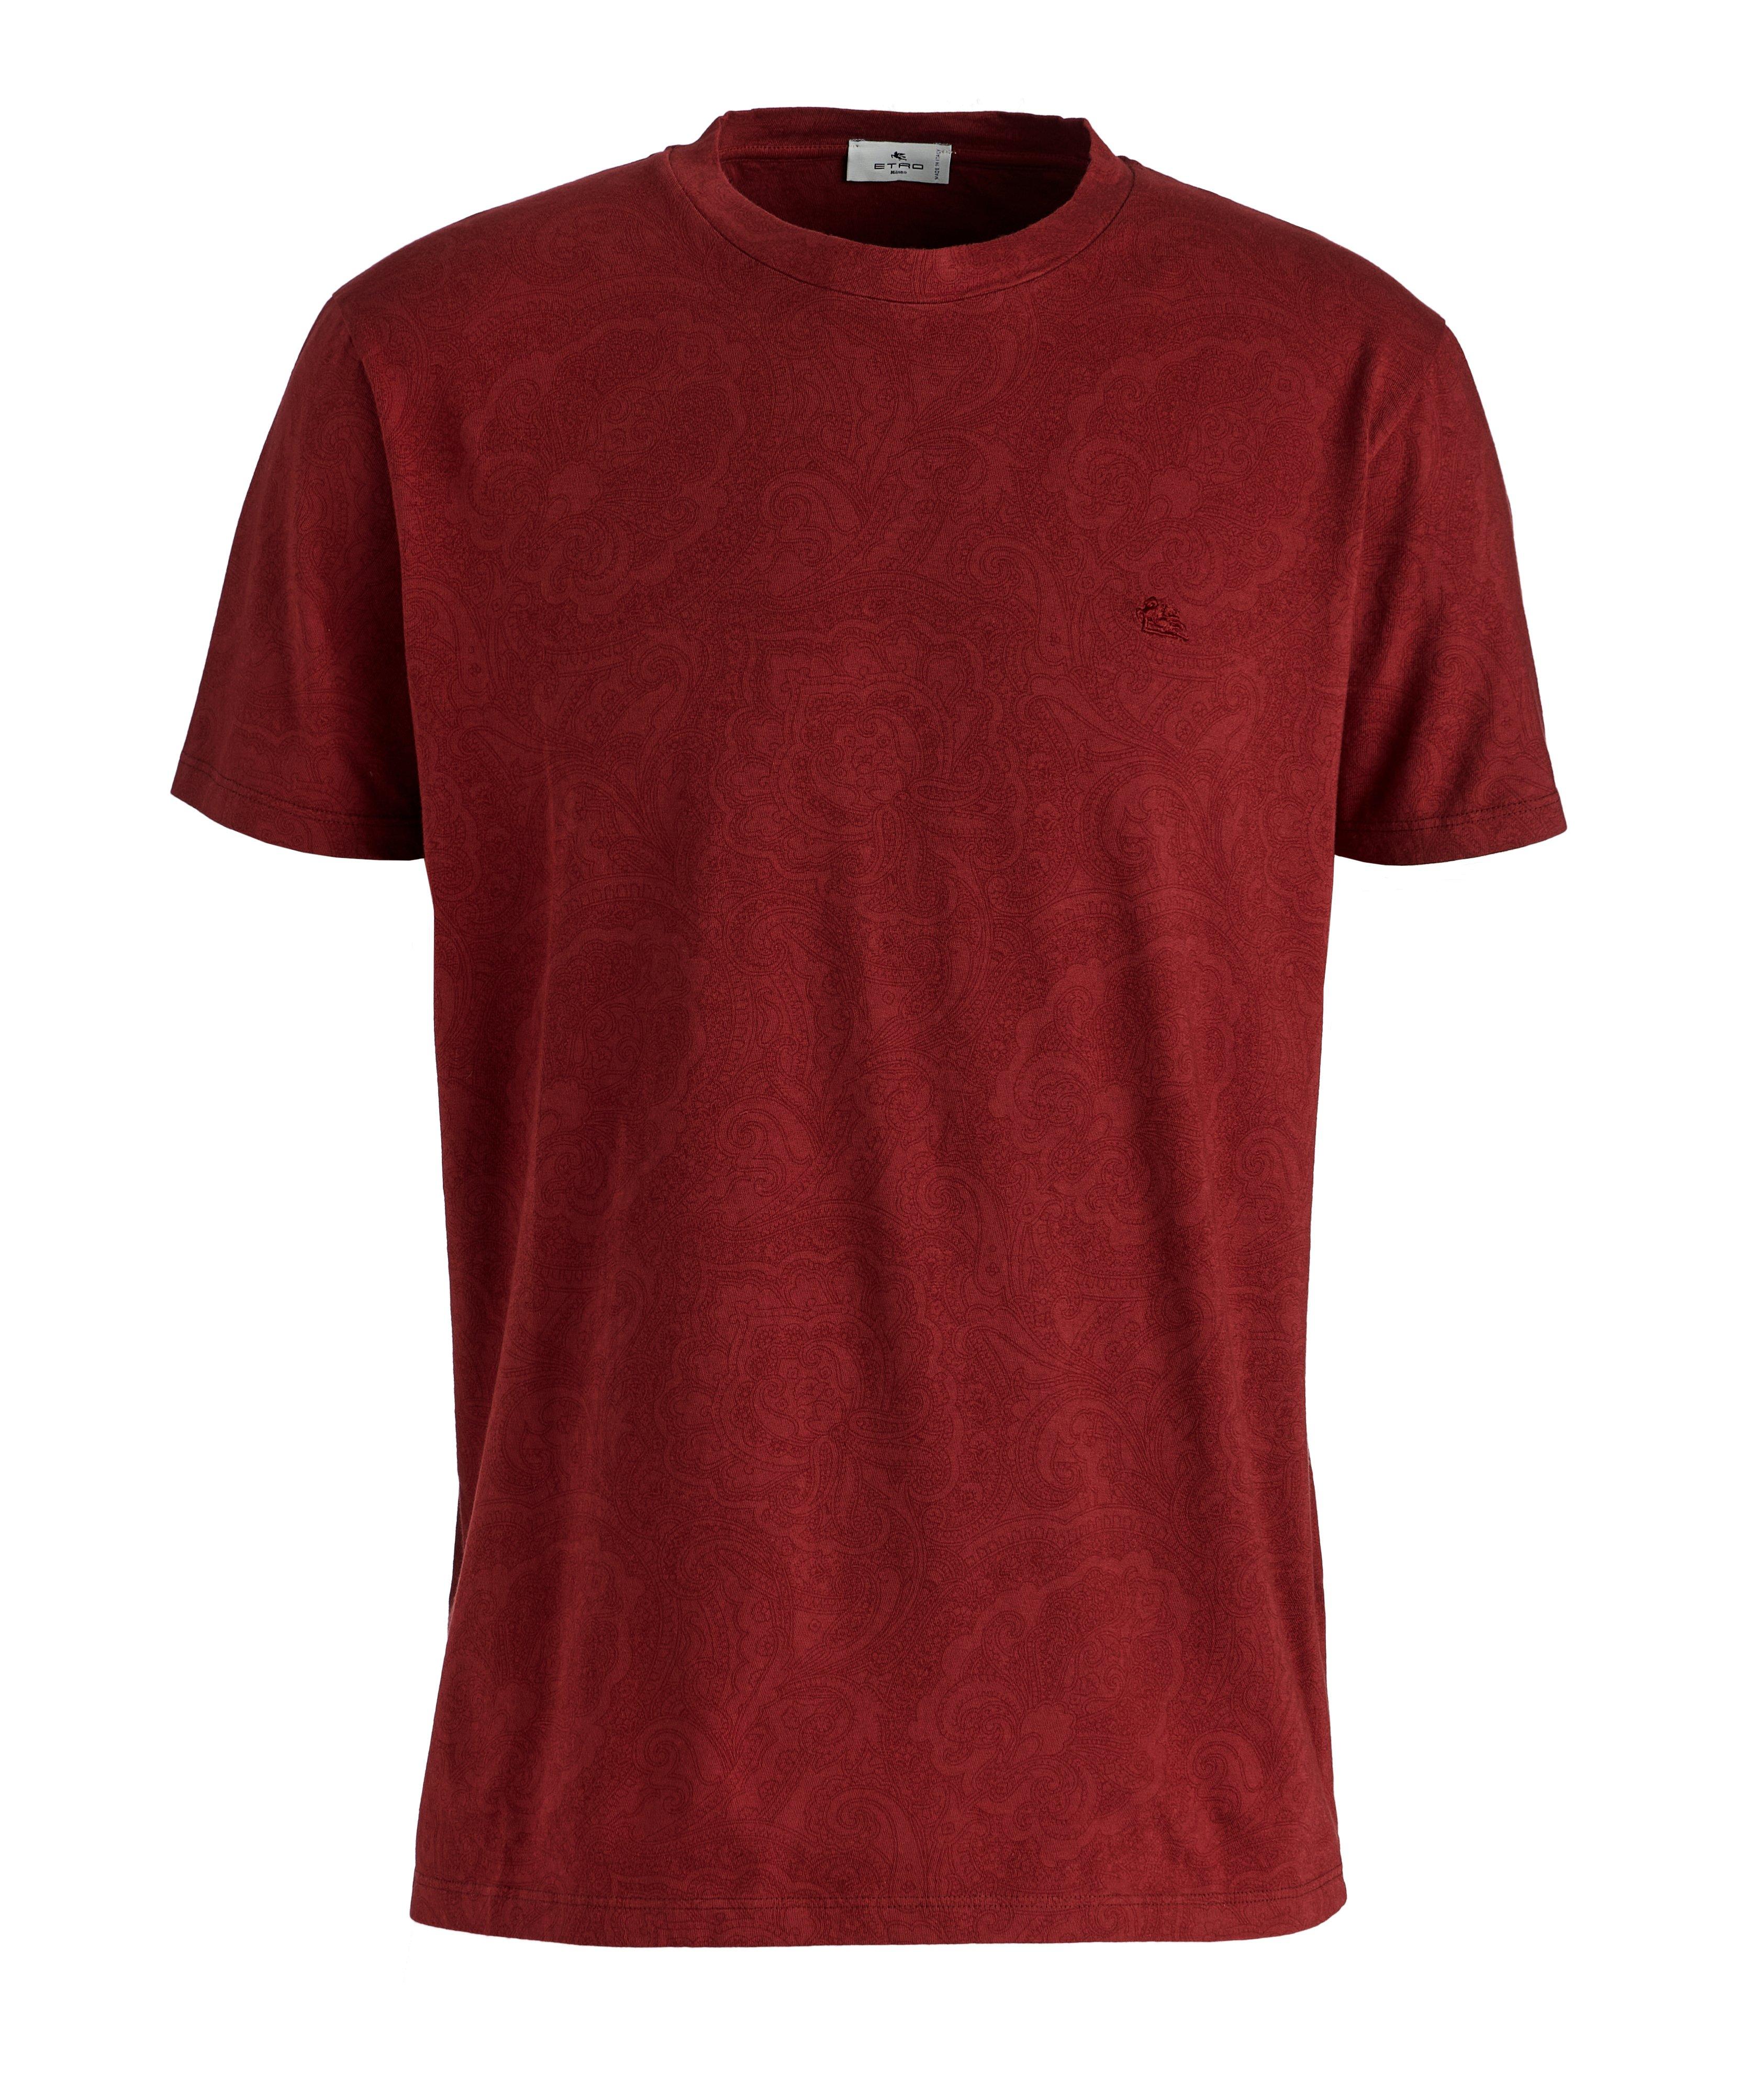 Paisley Printed Cotton T-Shirt image 0